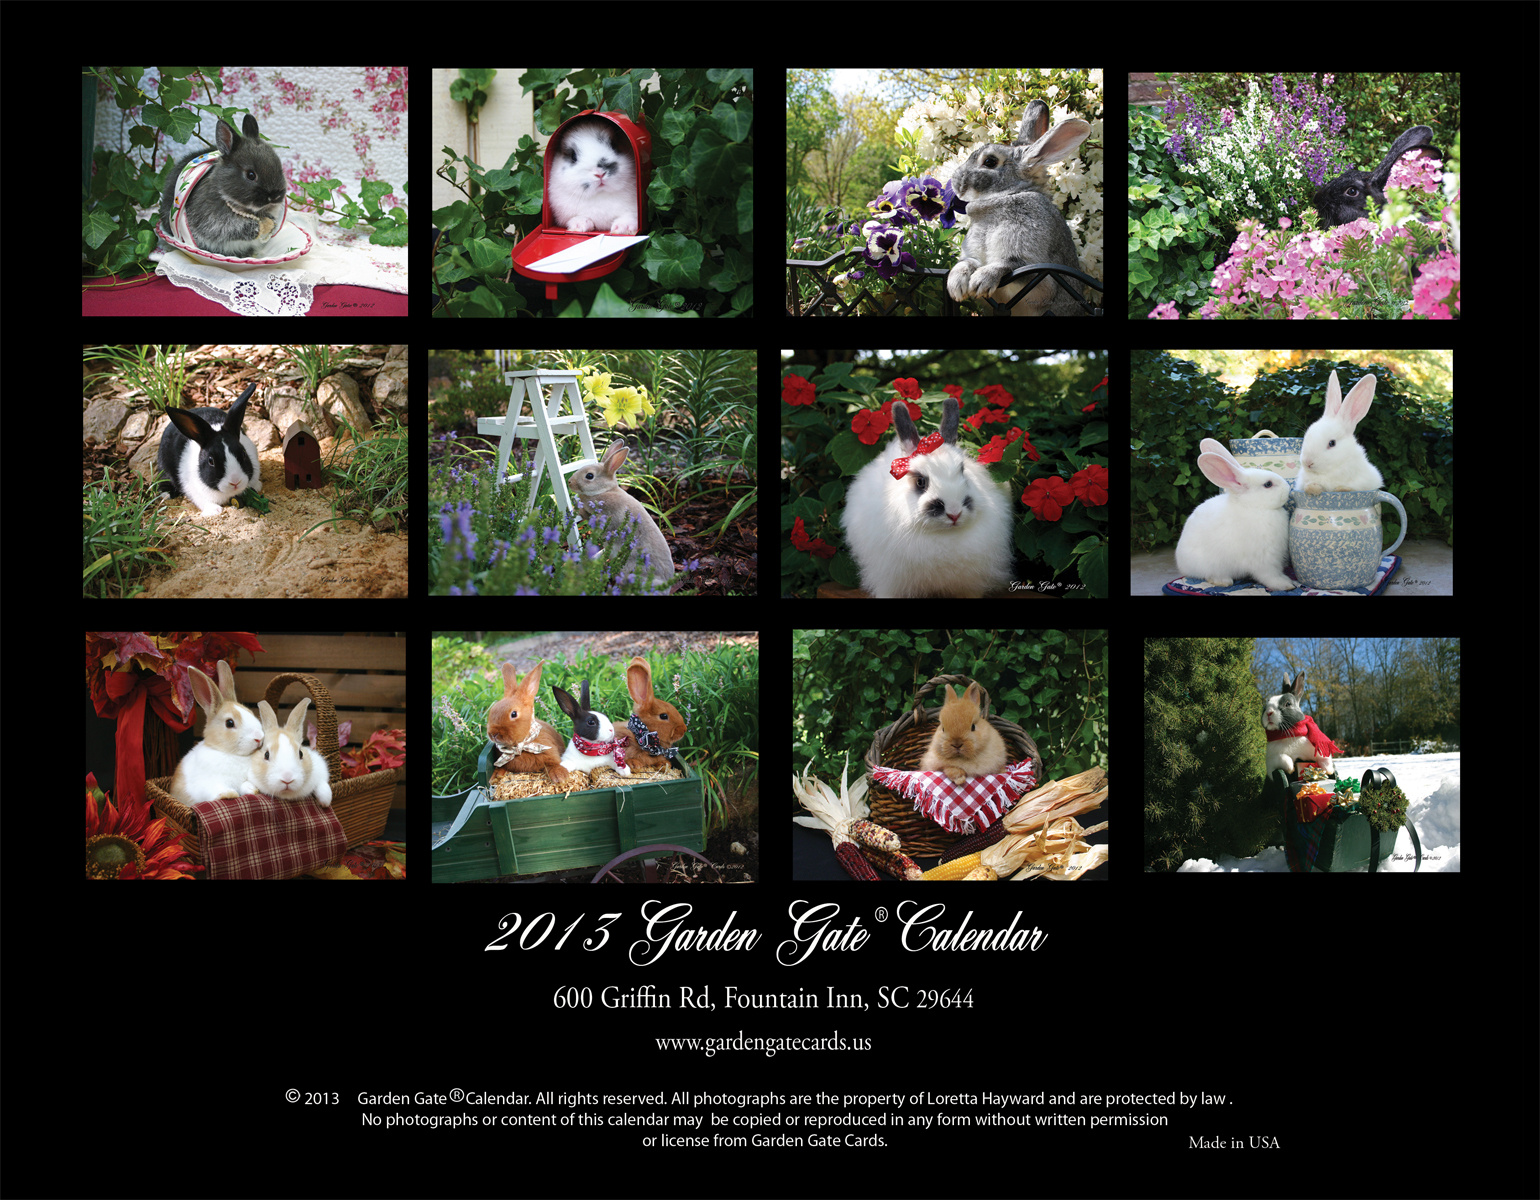 Our Rabbit Park Calendar